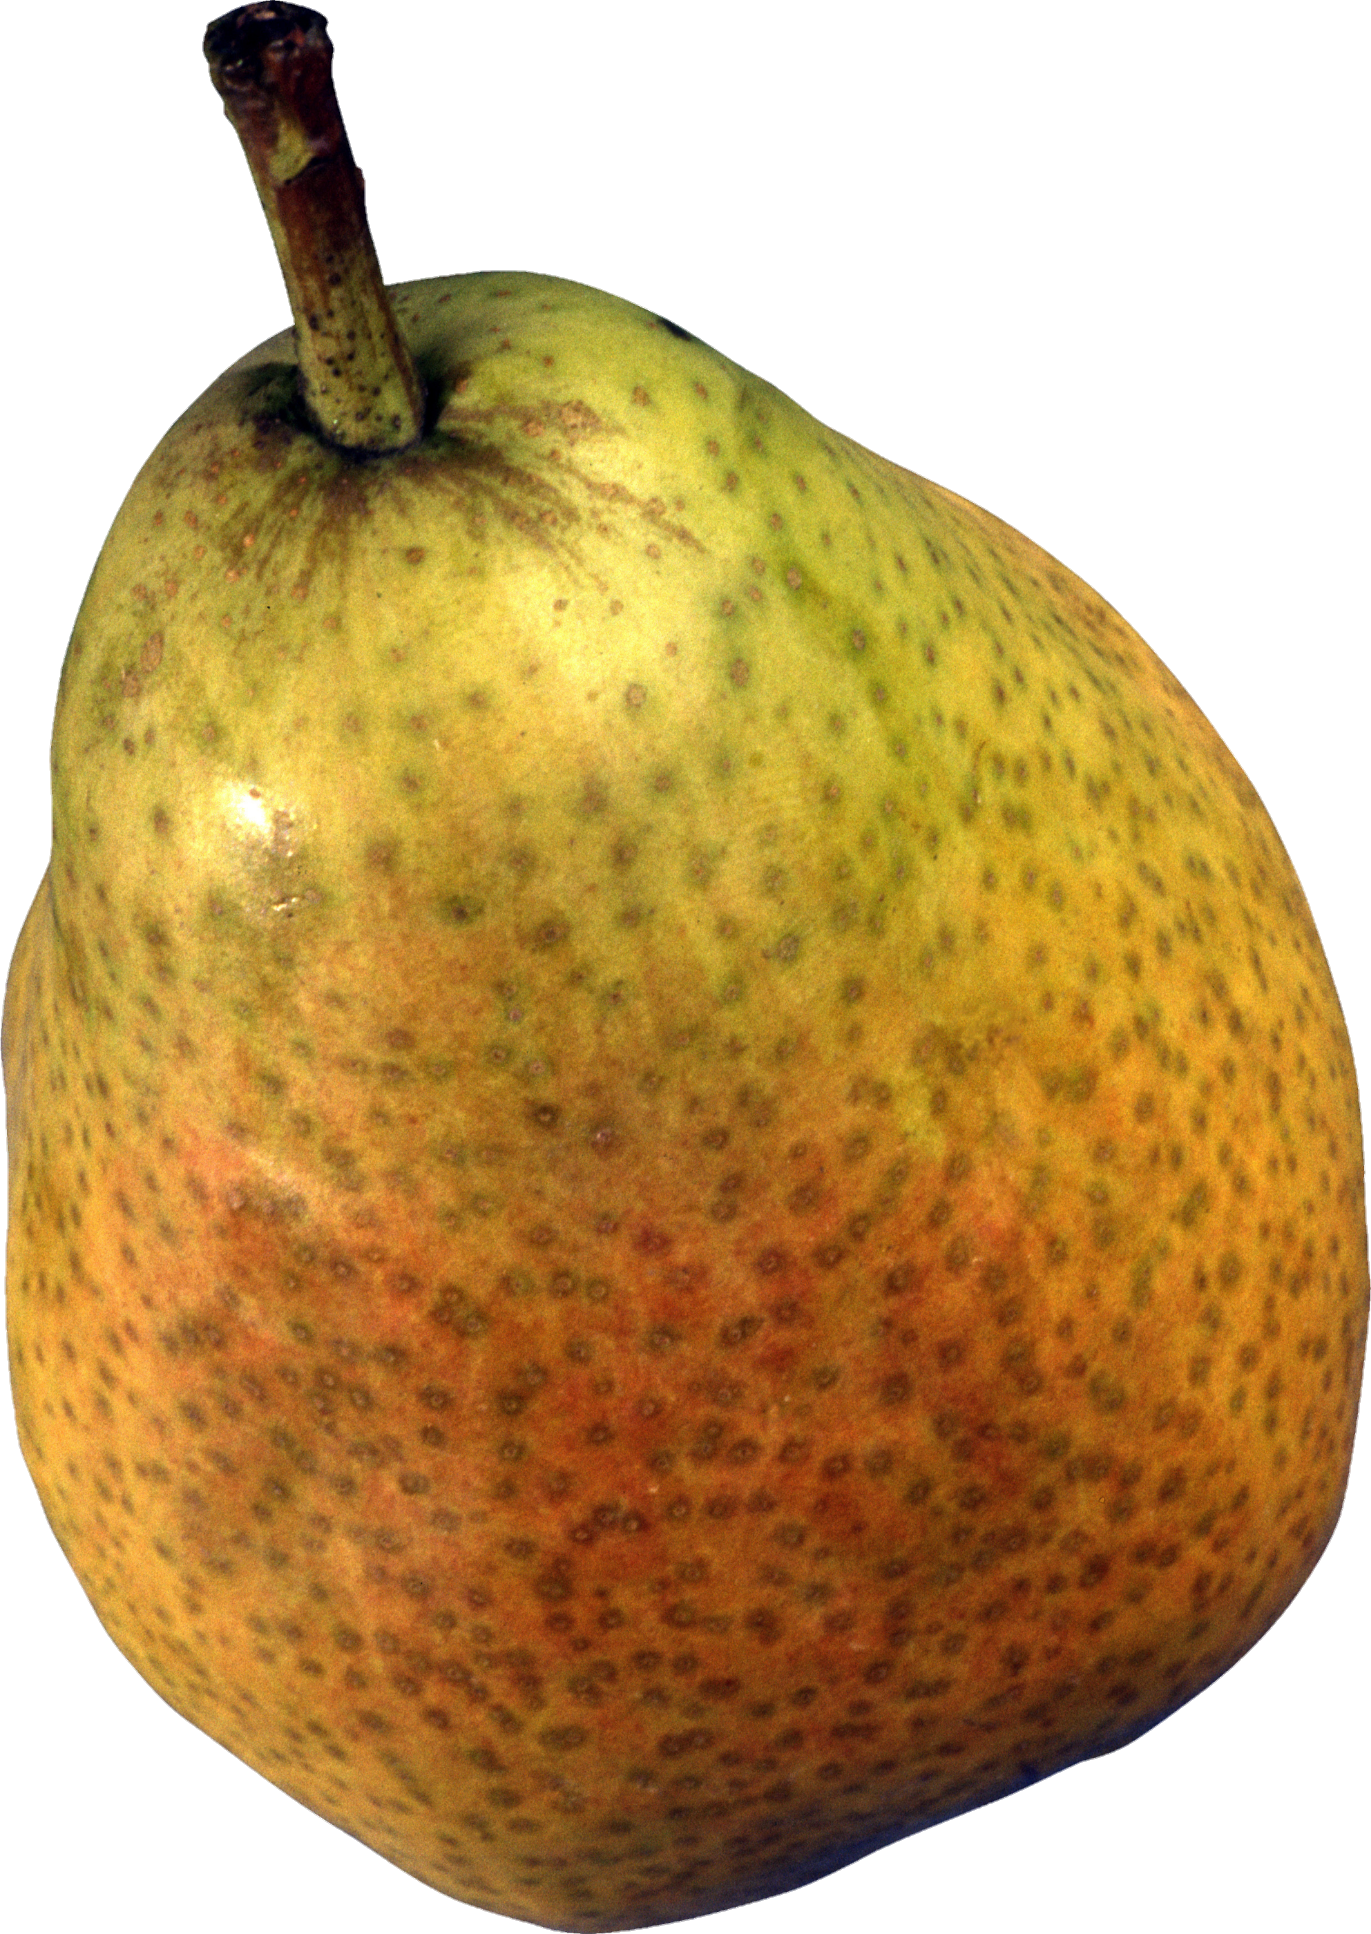 pear-5-1